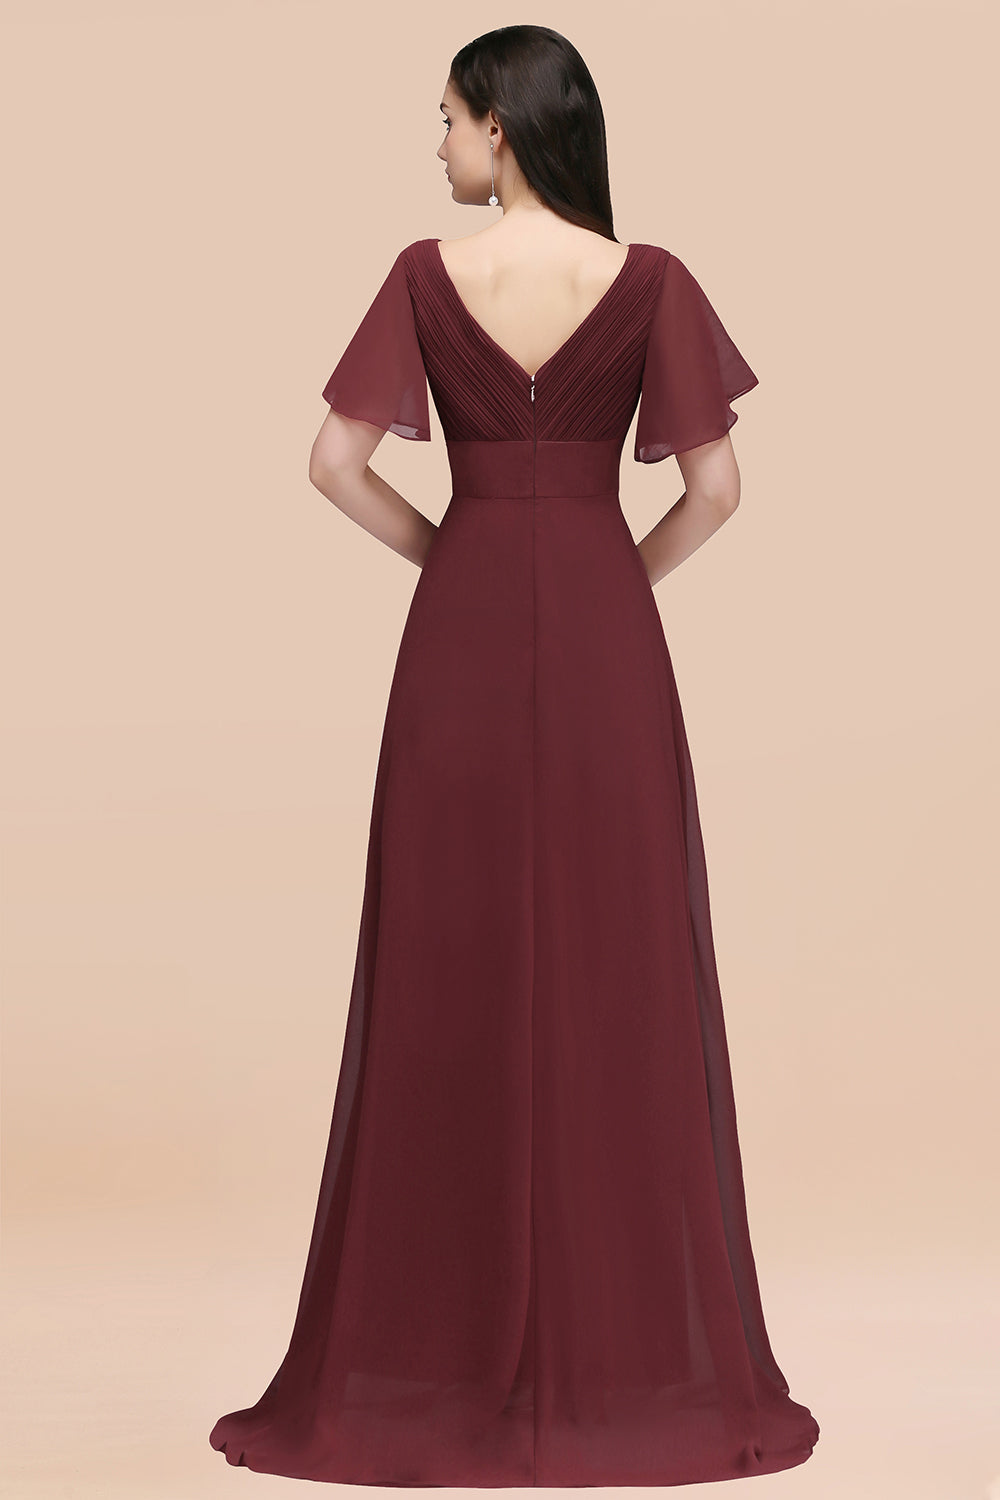 Affordable V-Neck Ruffle Long Burgundy Bridesmaid Dress With Short-Sleeves